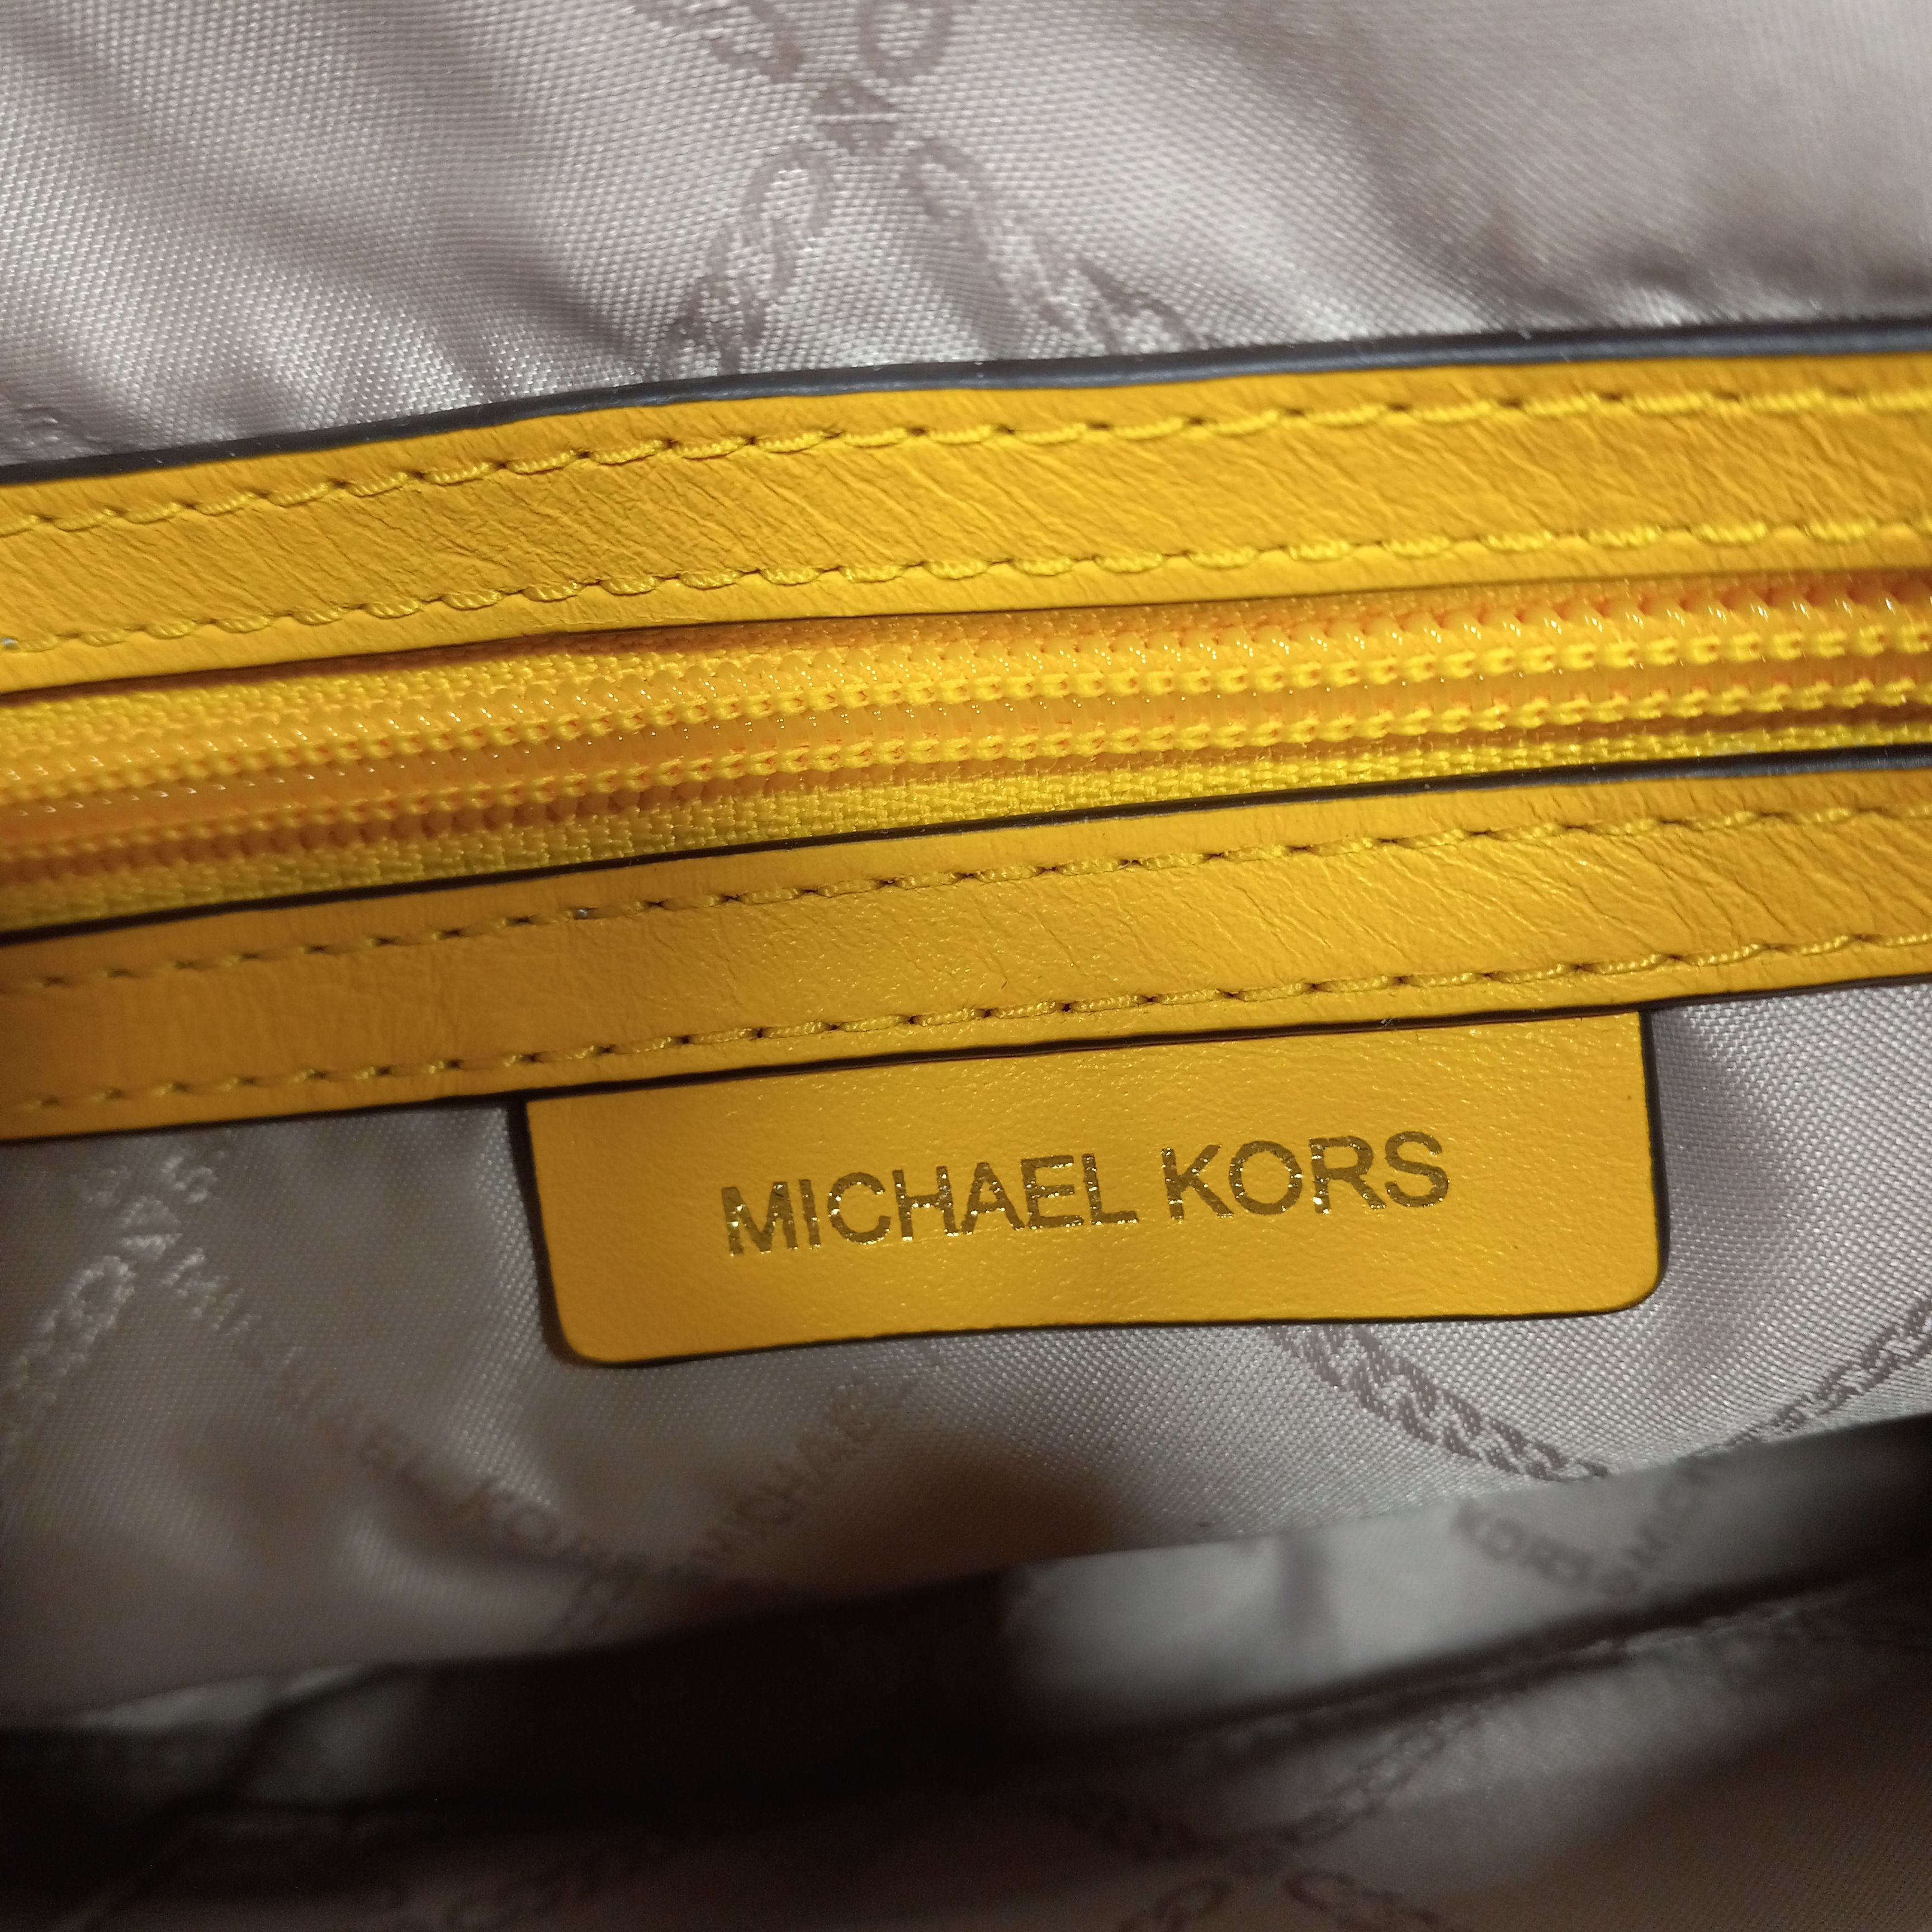 Michael Kors | Bags | Michael Kors Crossbody Bright Yellow Purse | Poshmark